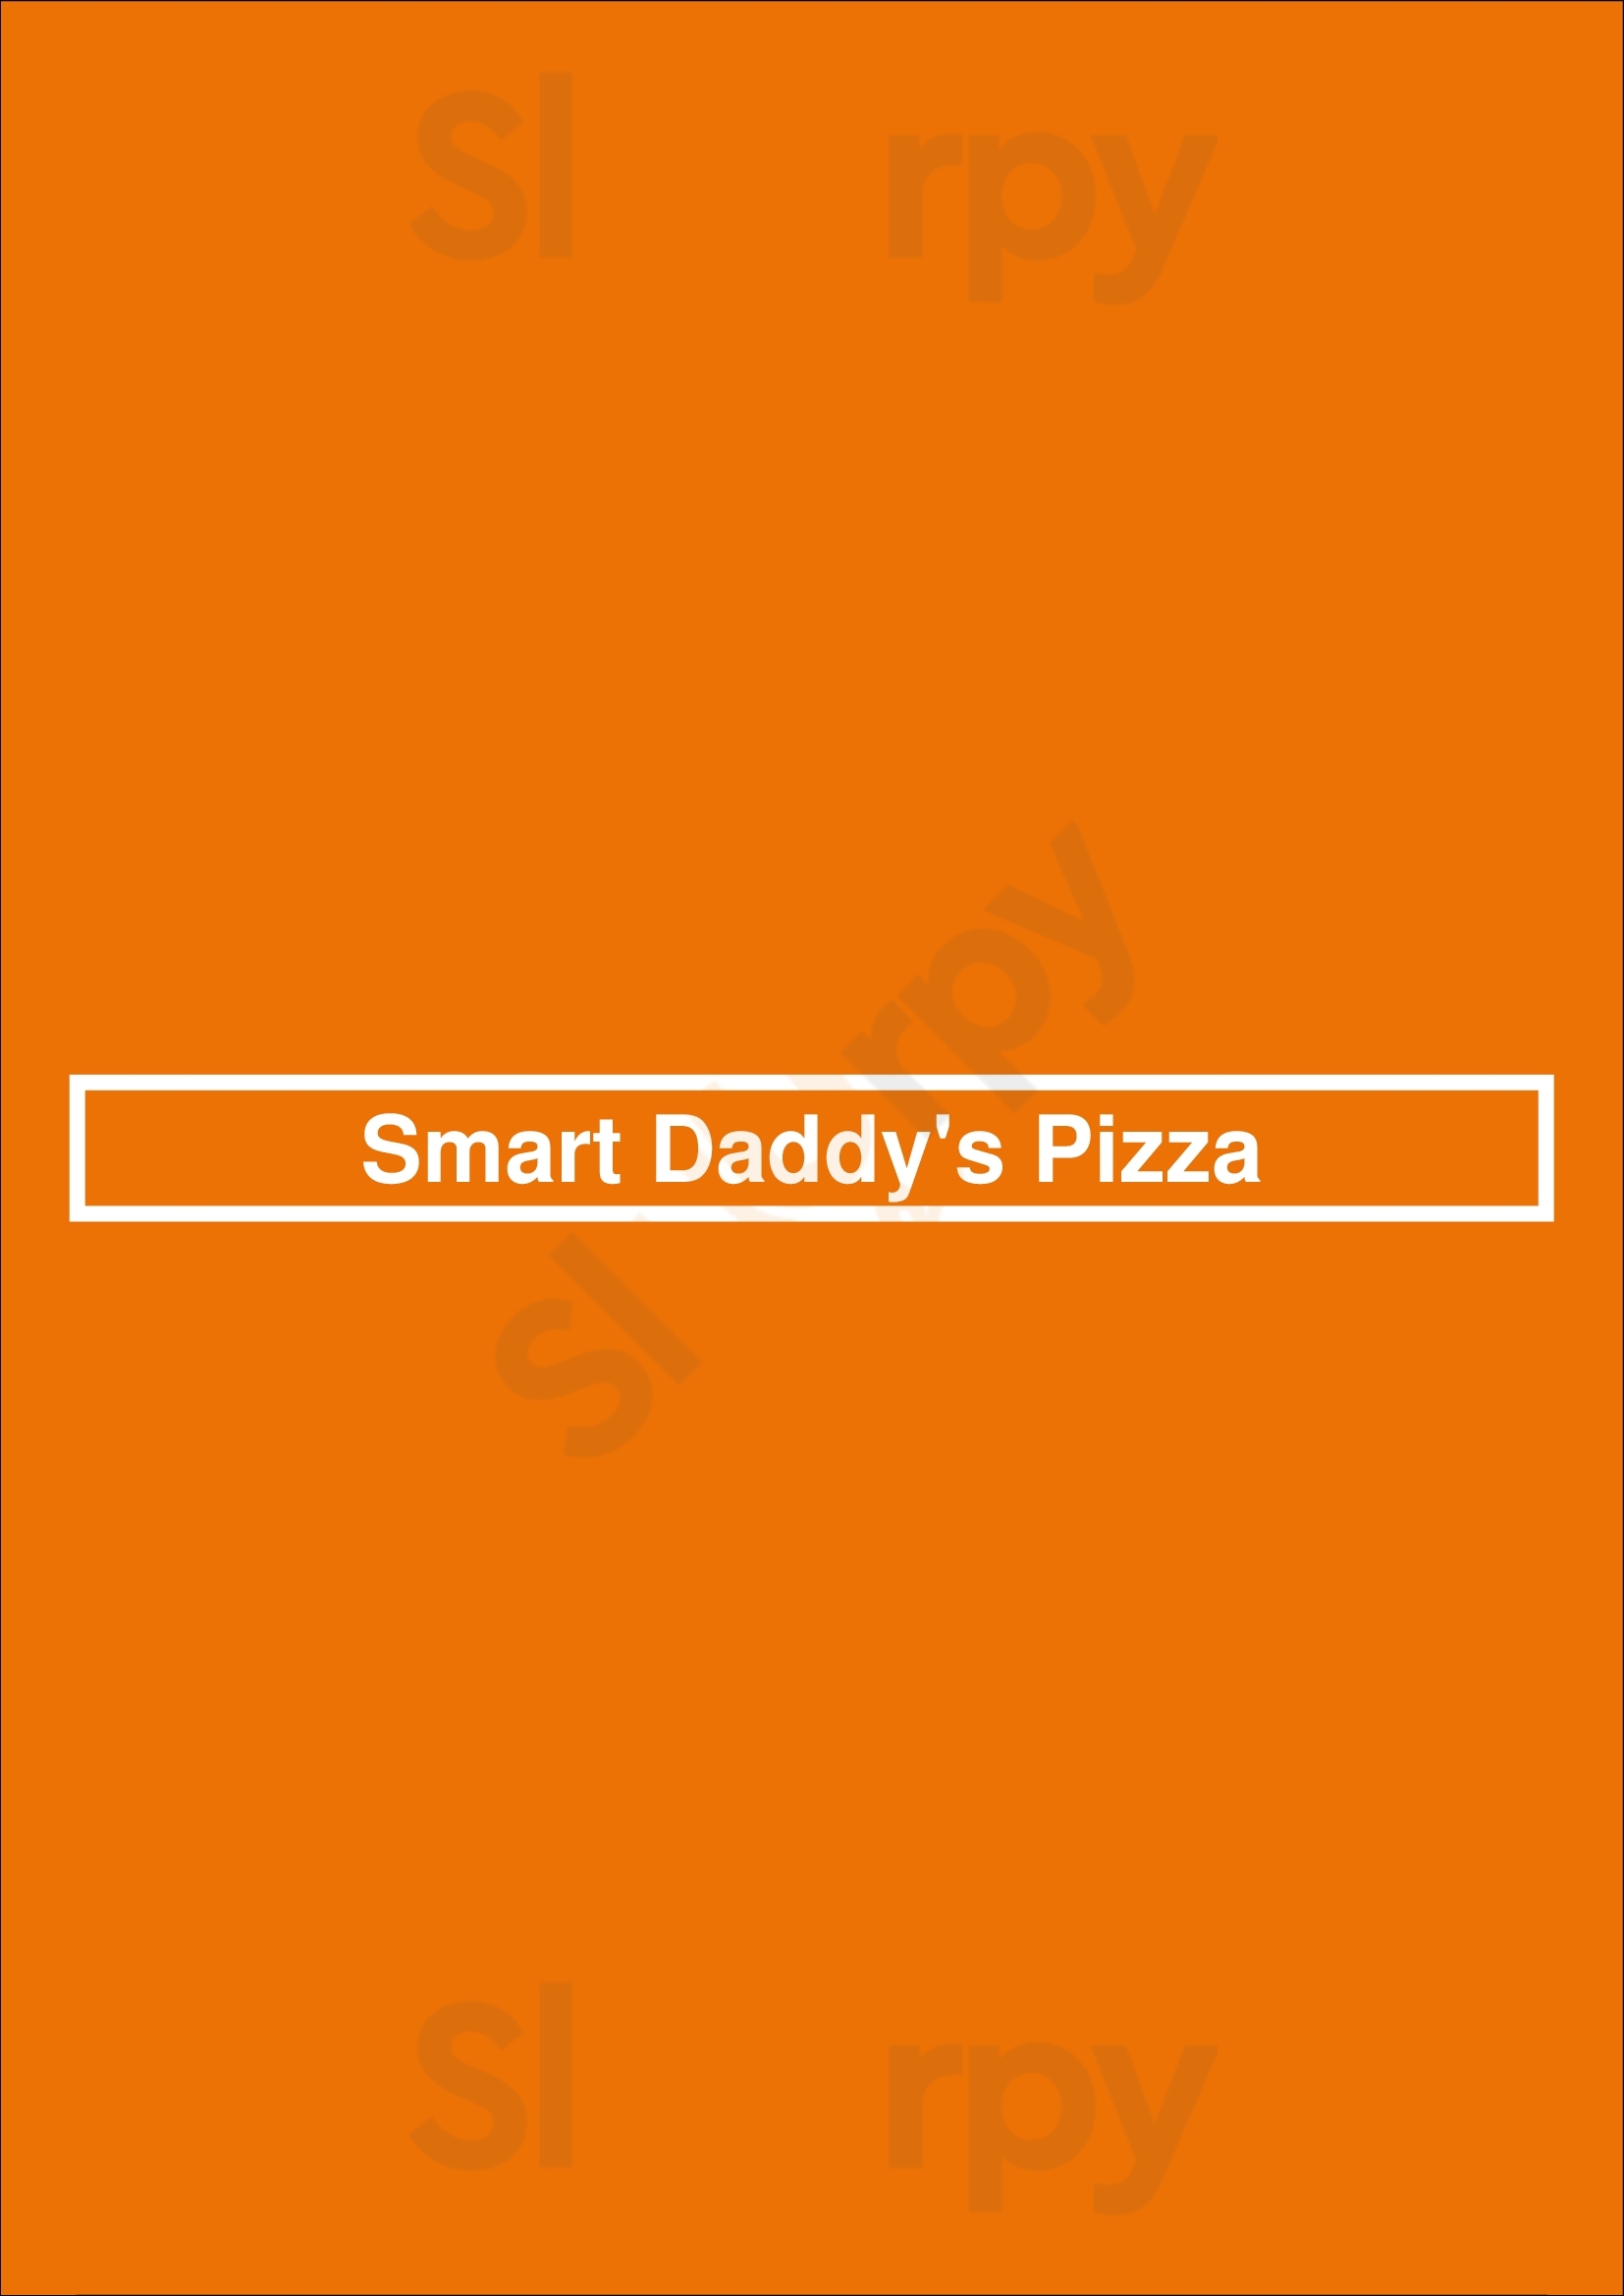 Smart Daddy's Pizza Houston Menu - 1